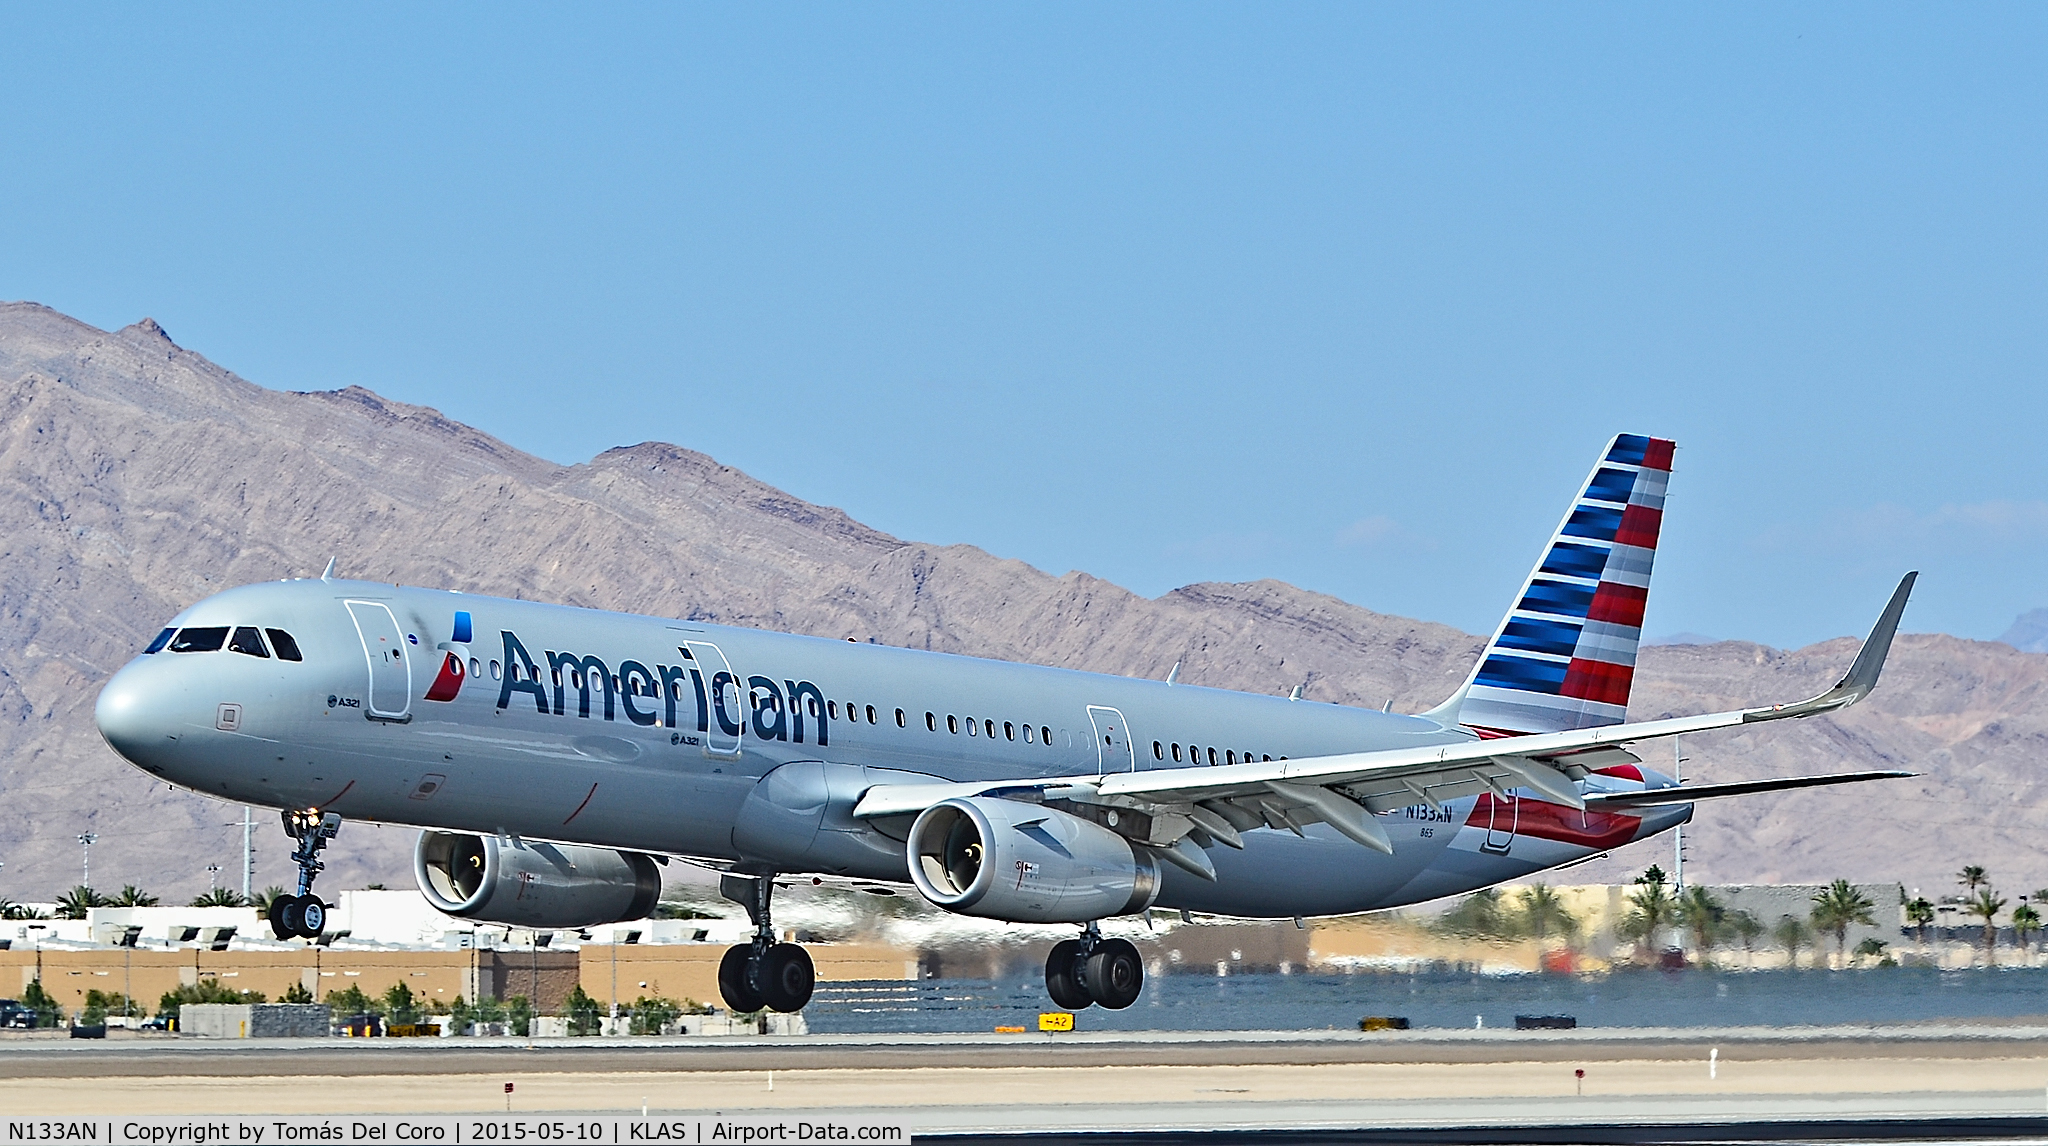 N133AN, 2015 Airbus A321-200 C/N 6482, N133AN American Airlines 2015 Airbus A321-231 - cn 6482

Las Vegas - McCarran International Airport (LAS / KLAS)
USA - Nevada May 10, 2015
Photo: Tomás Del Coro